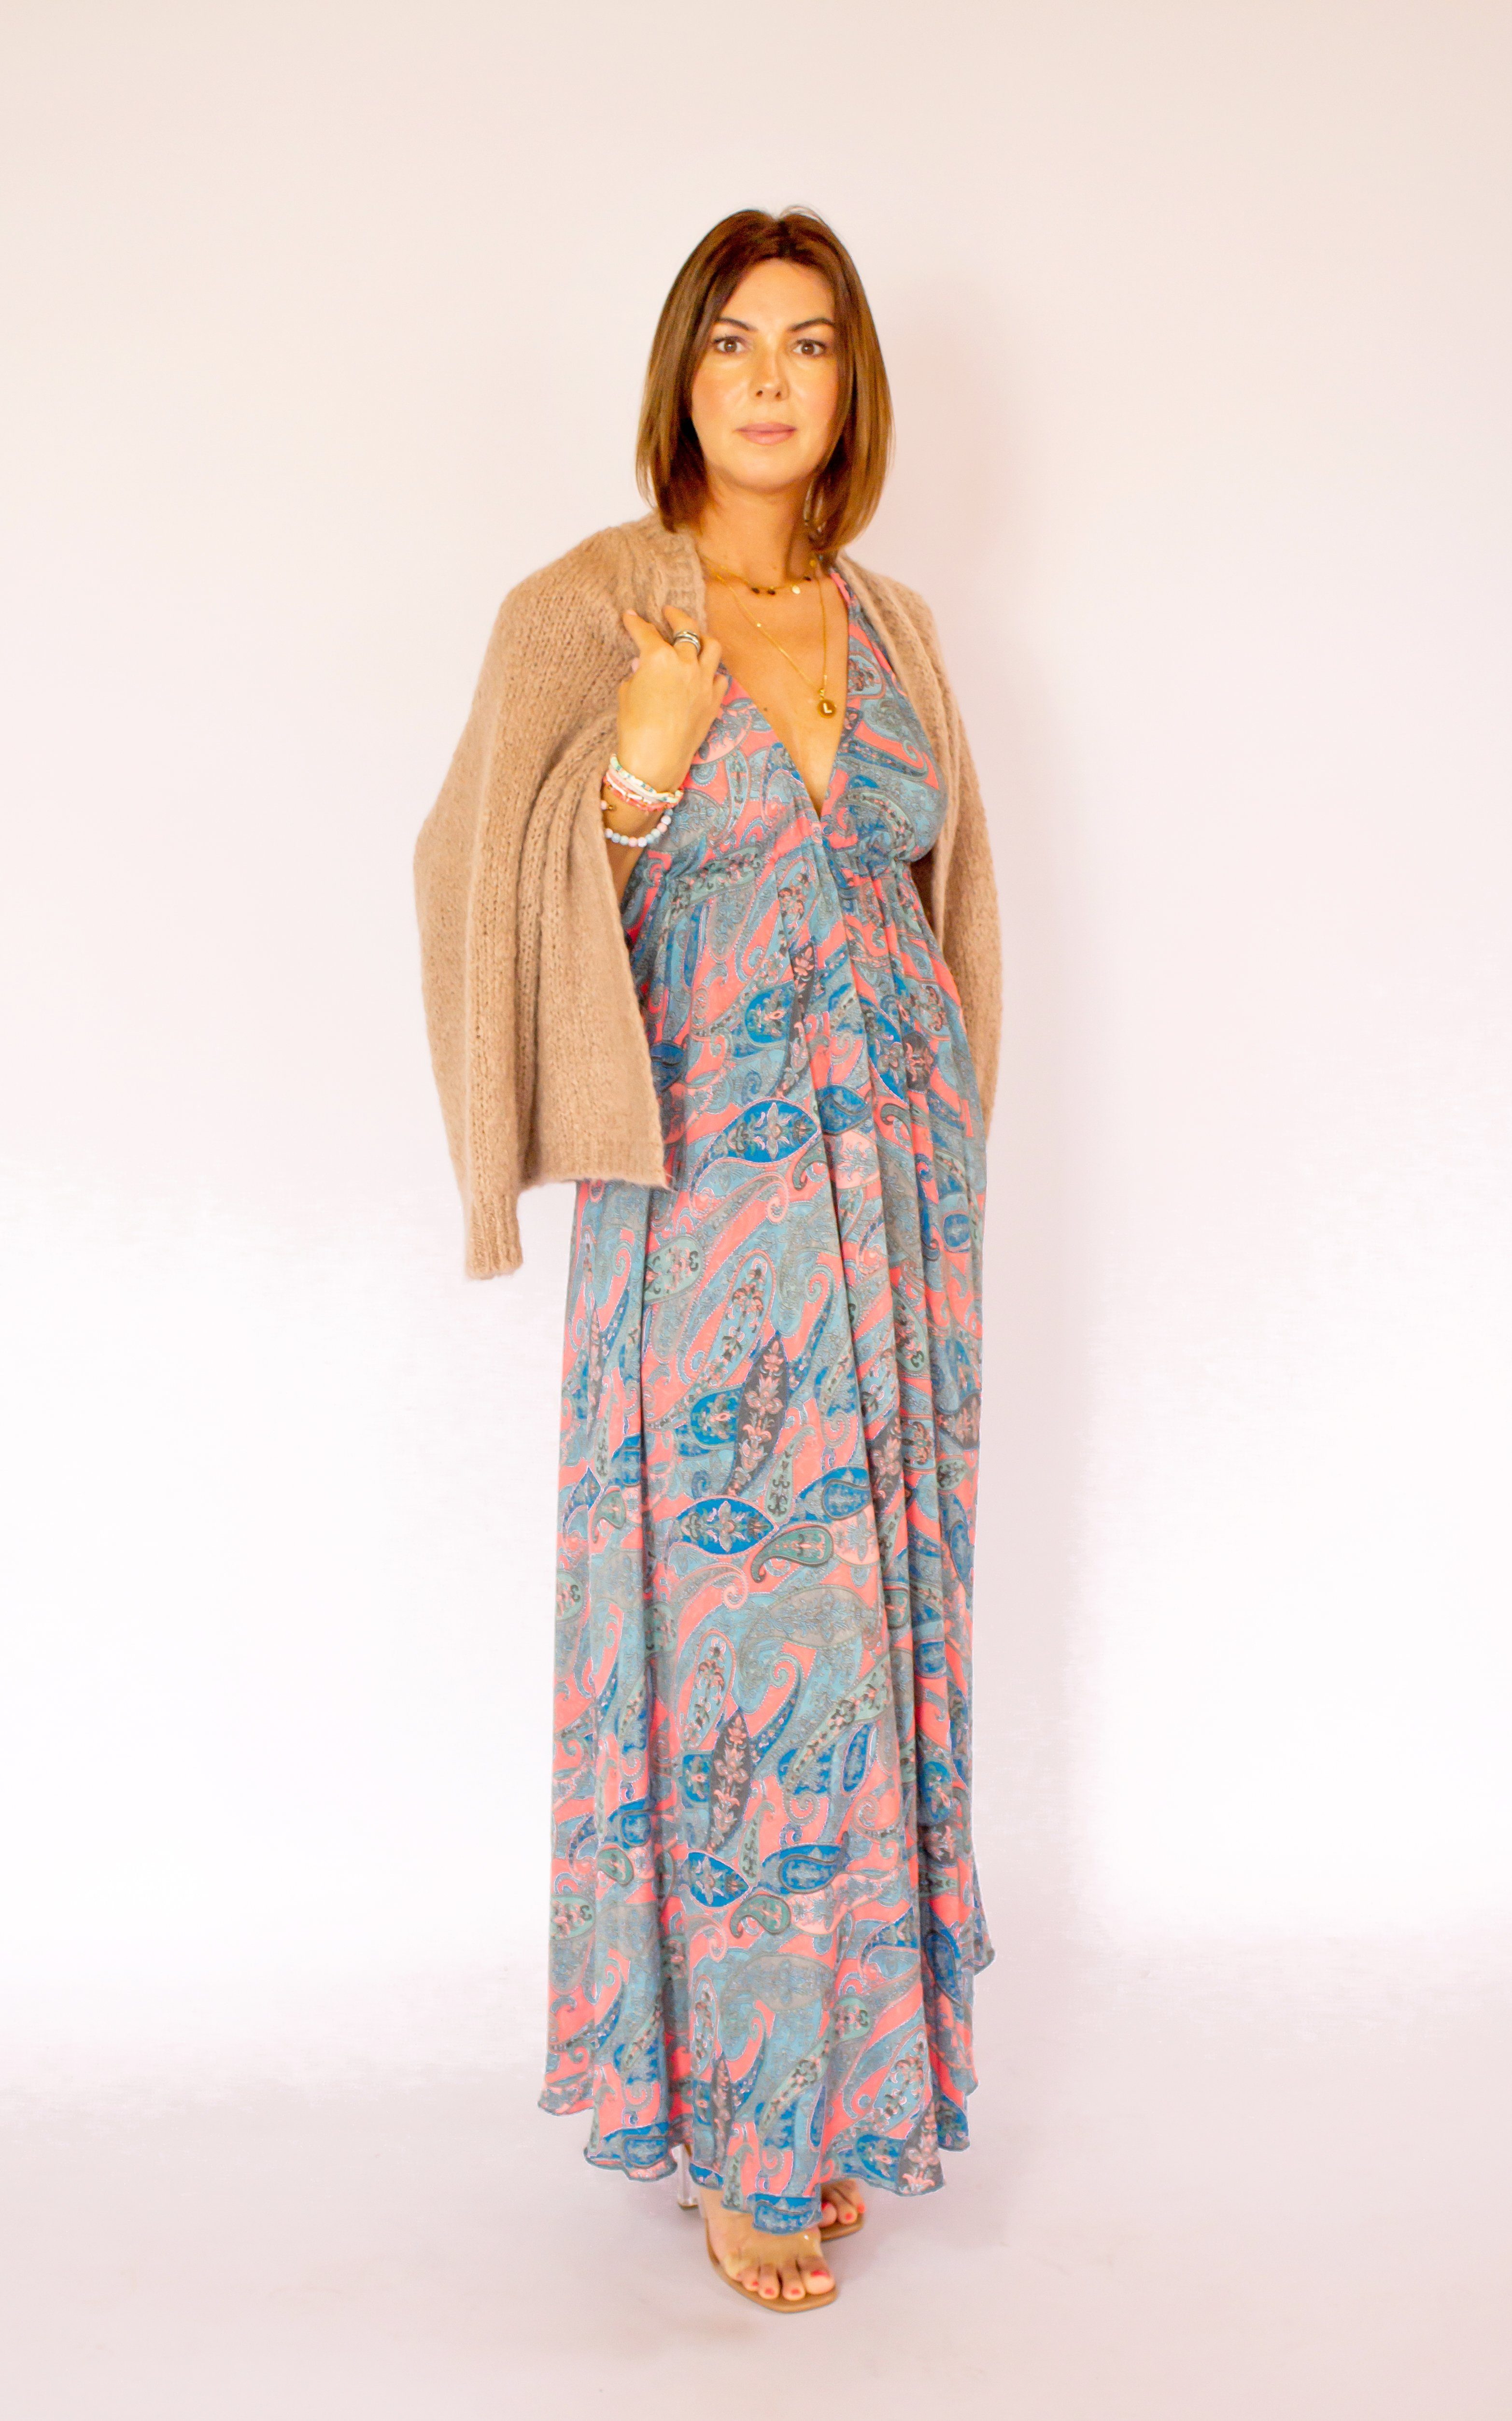 MonCaprise Sommerkleid One Mehrfarbig Rückenausschnitt Clothè by Strandkleid Boho, mit Seidenmix Maxikleid Size tiefem